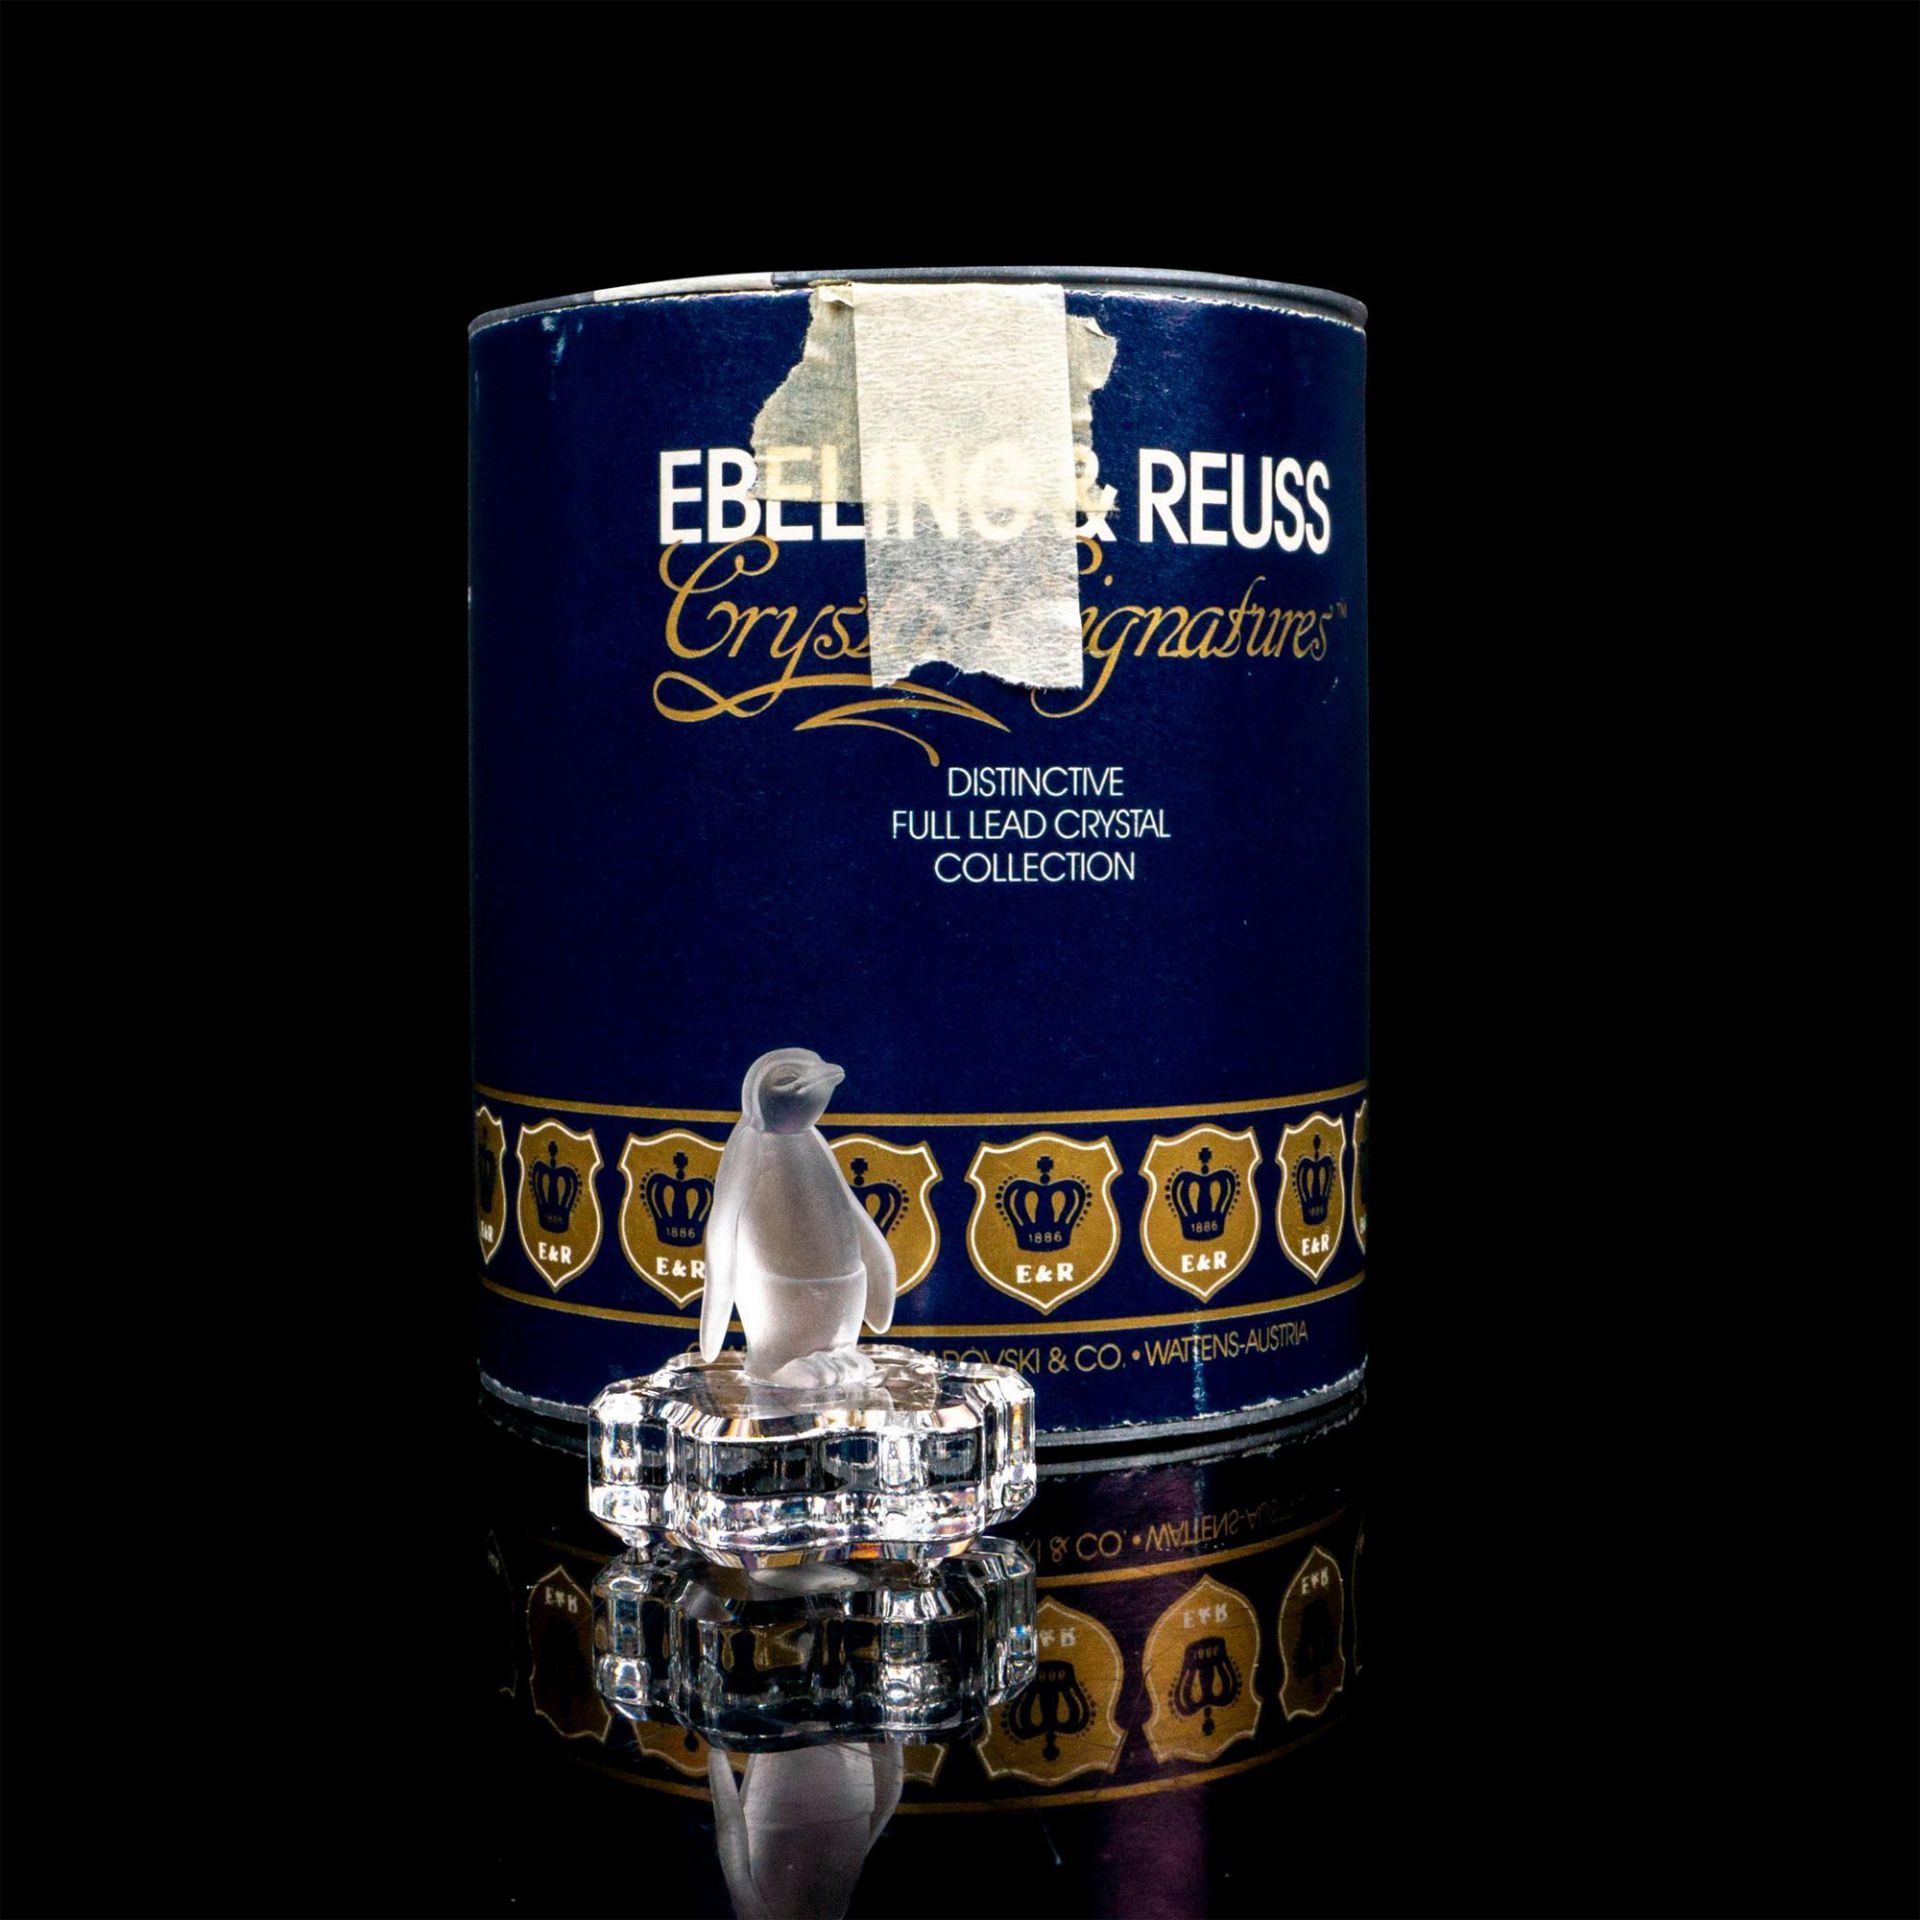 Ebeling & Reuss Crystal Figurine by Swarovski, Penguin - Image 4 of 4